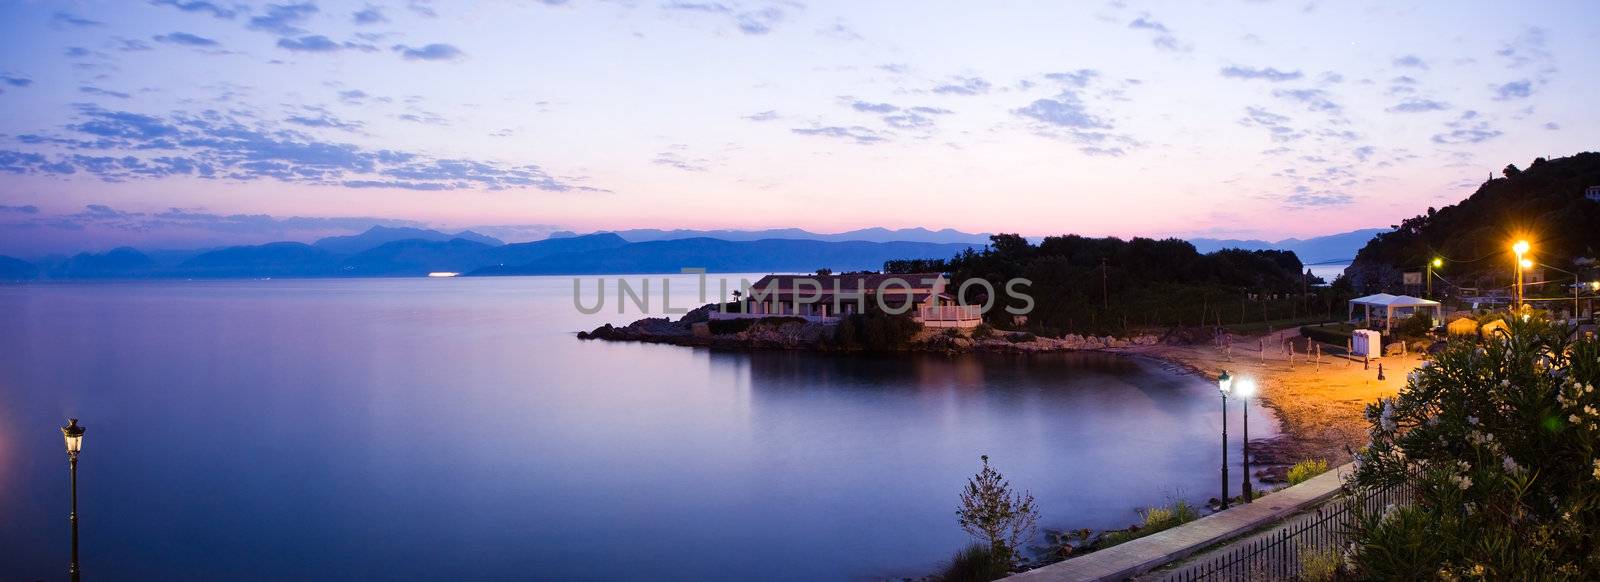 Corfu landscape by Gbuglok